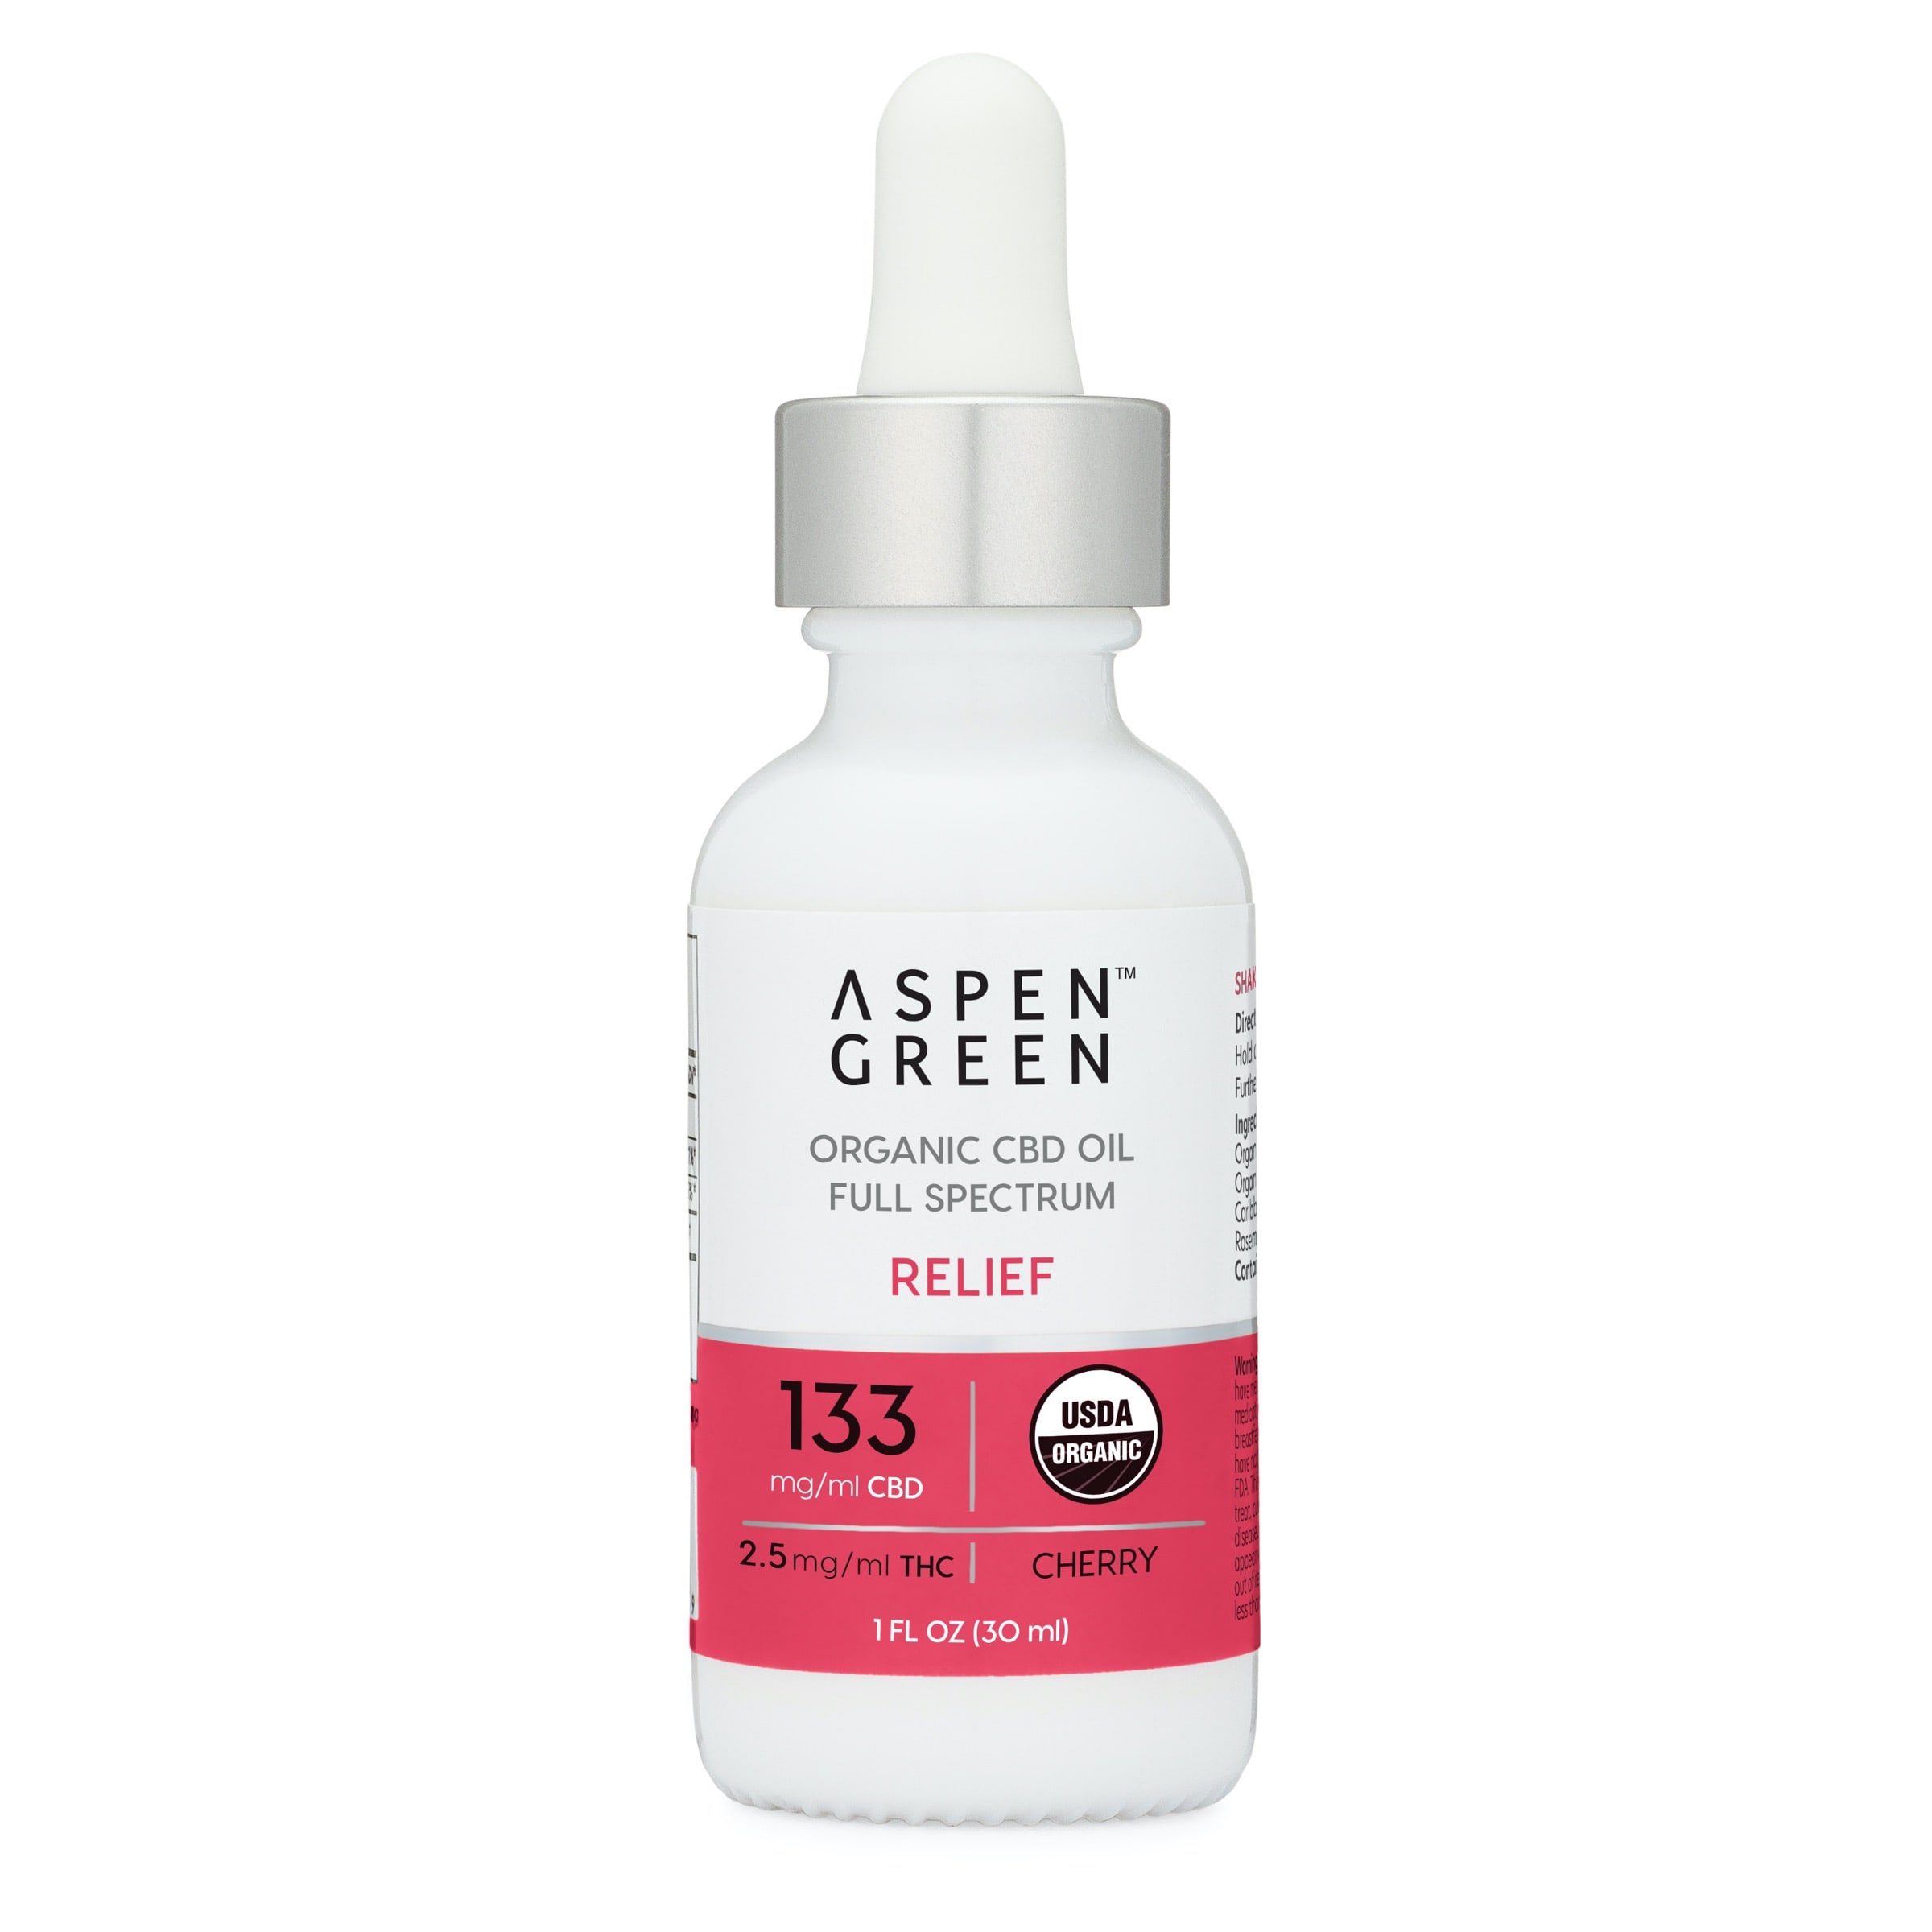 Aspen Green USDA Certified Organic CBD Oil Tincture, Relief (133mg/ml CBD), Cherry Flavor